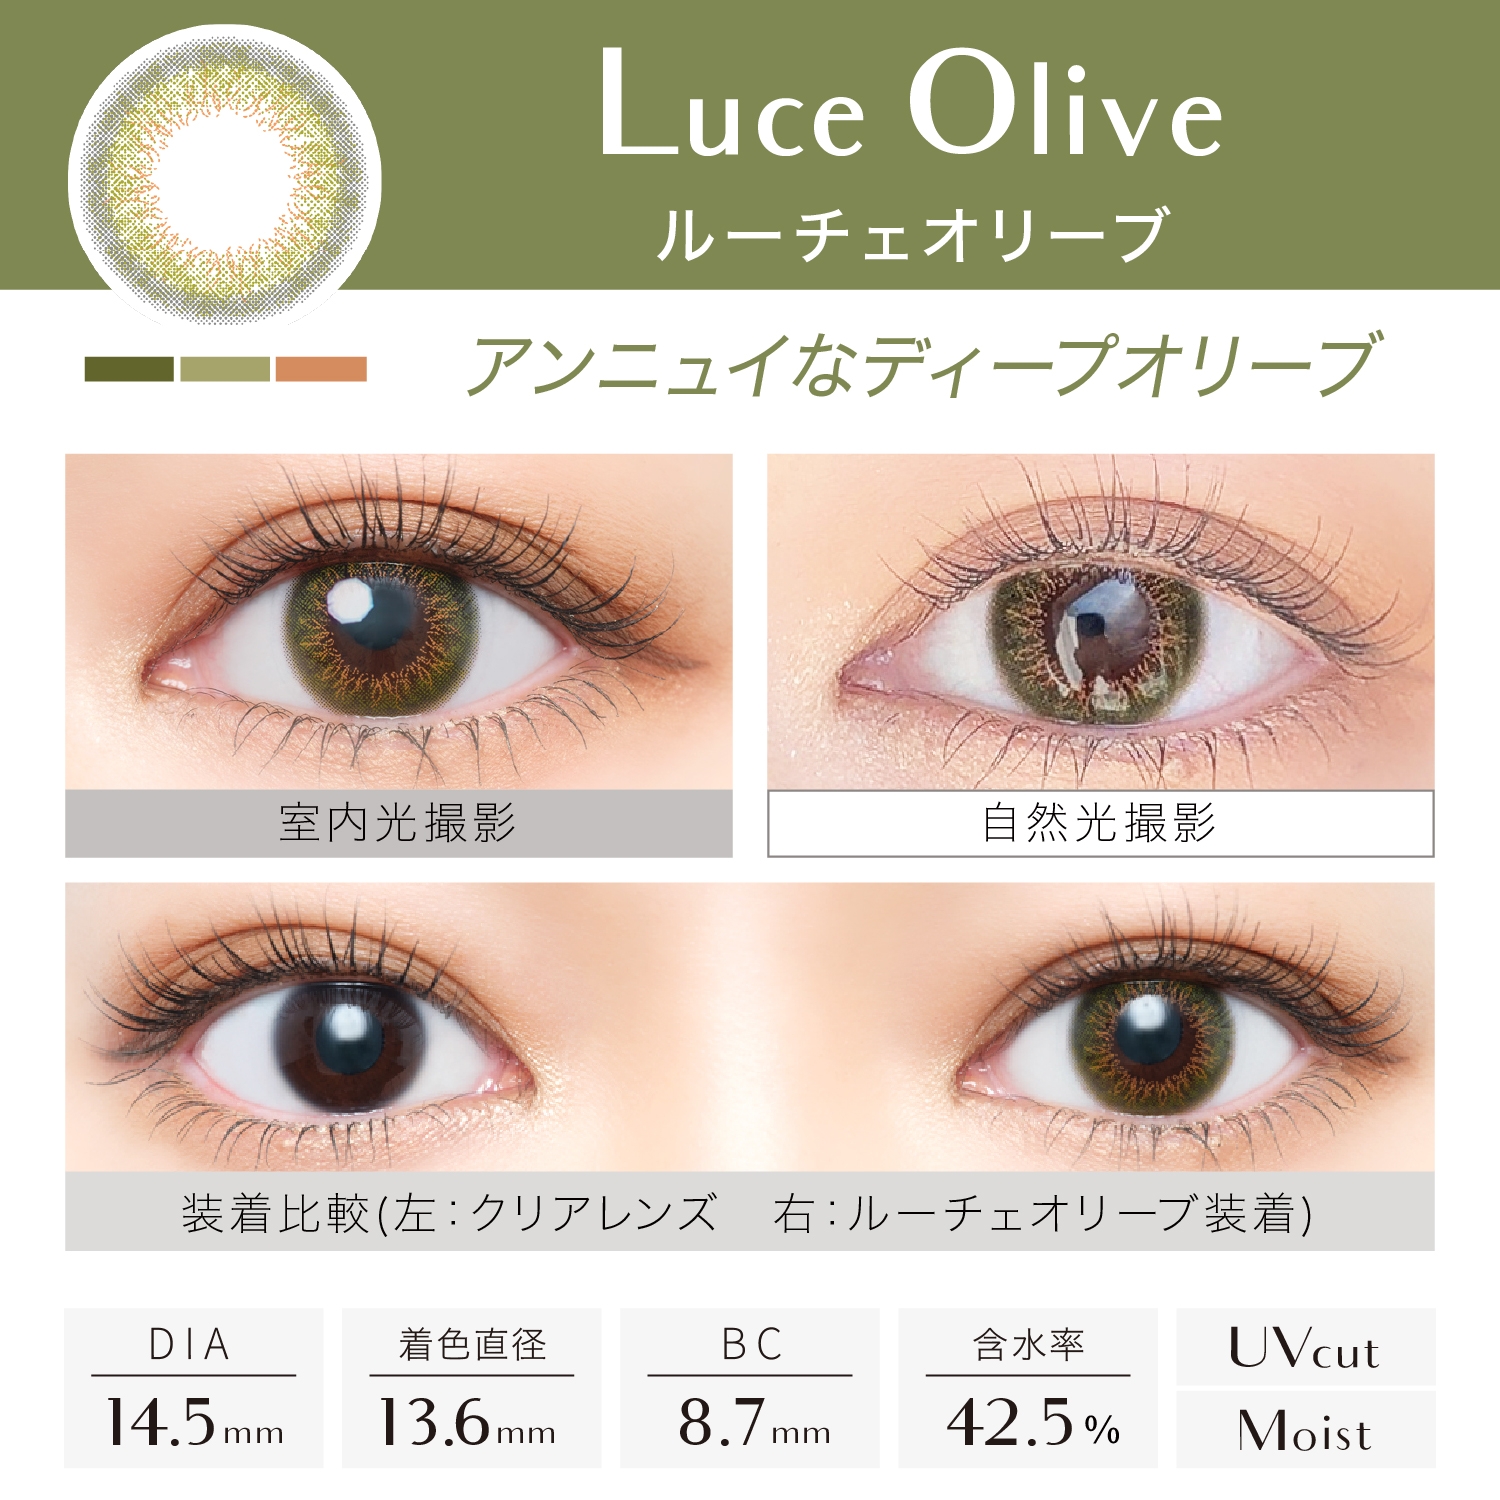 Luce Olive